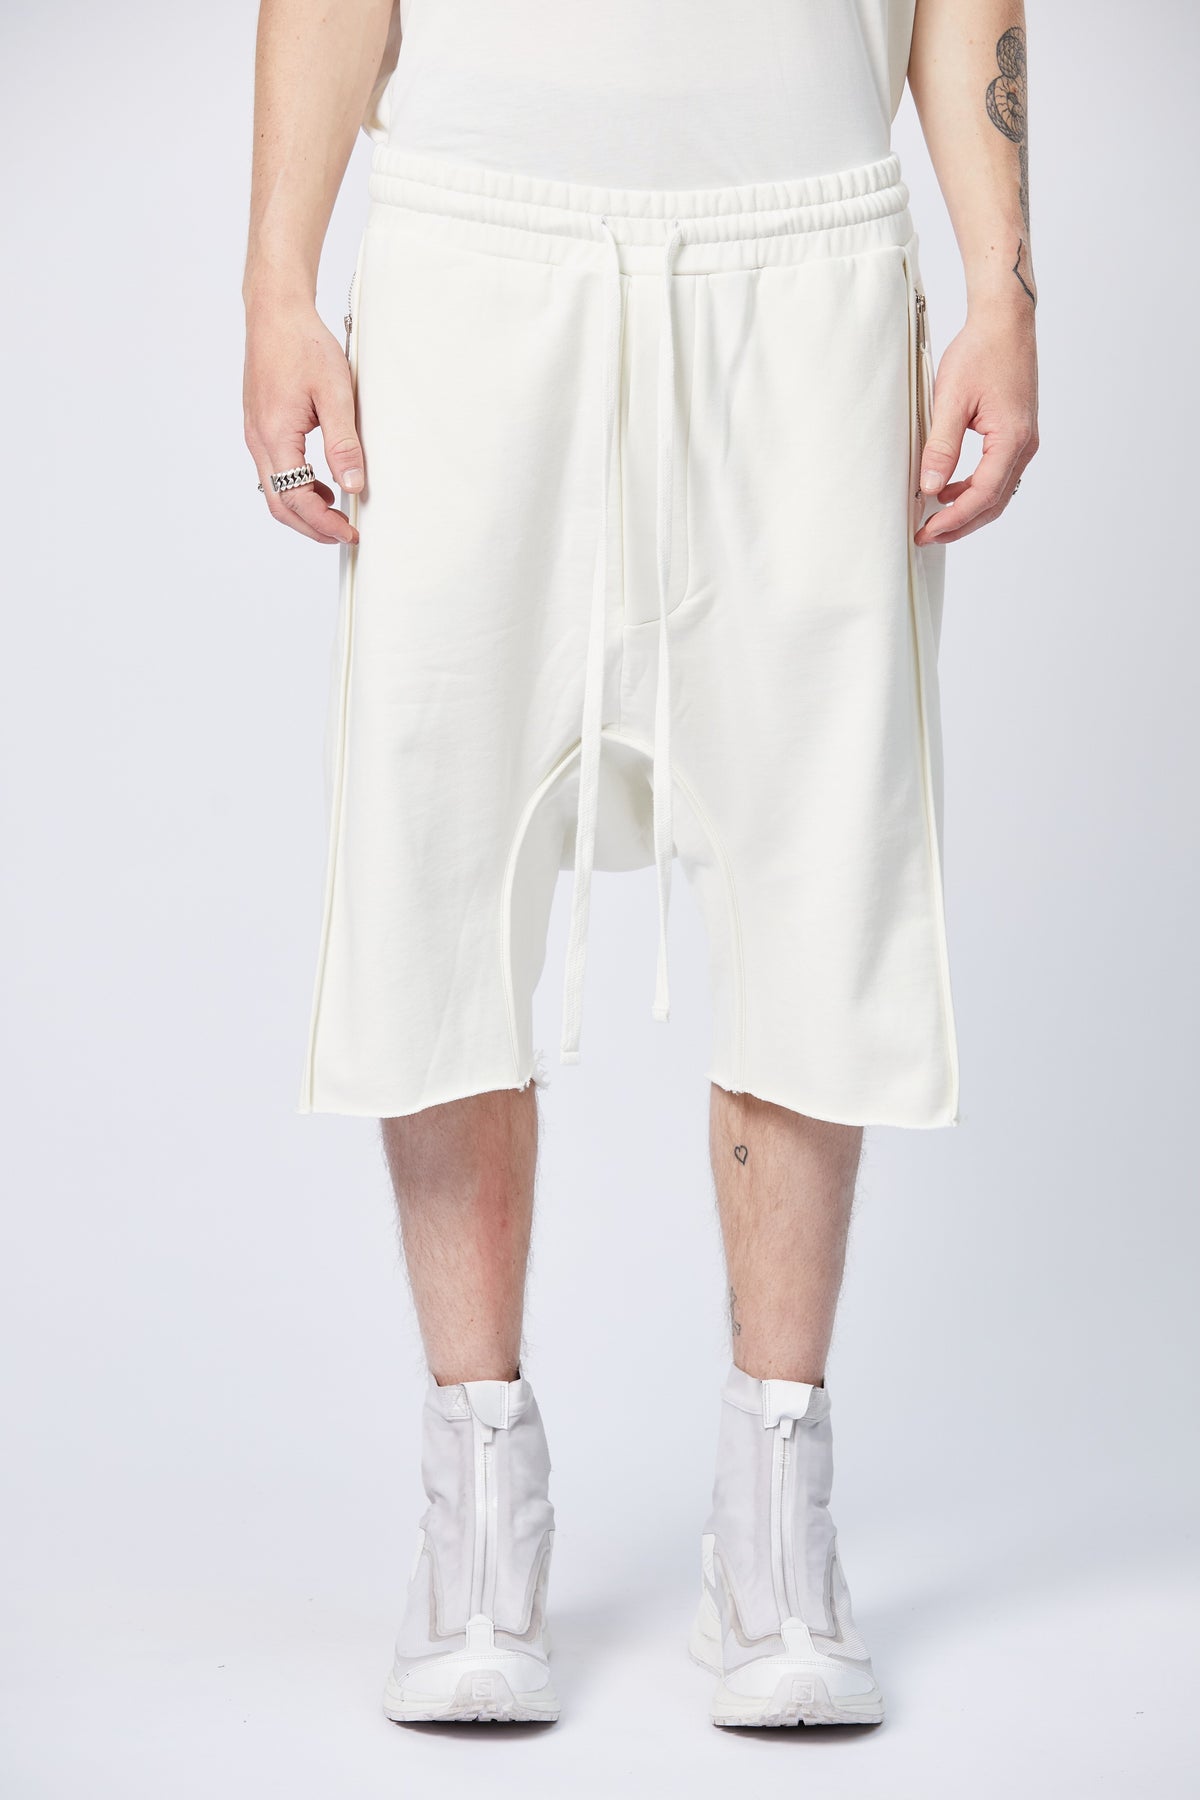 thom/krom M ST 434 Drop Crotch Long Shorts - Cream